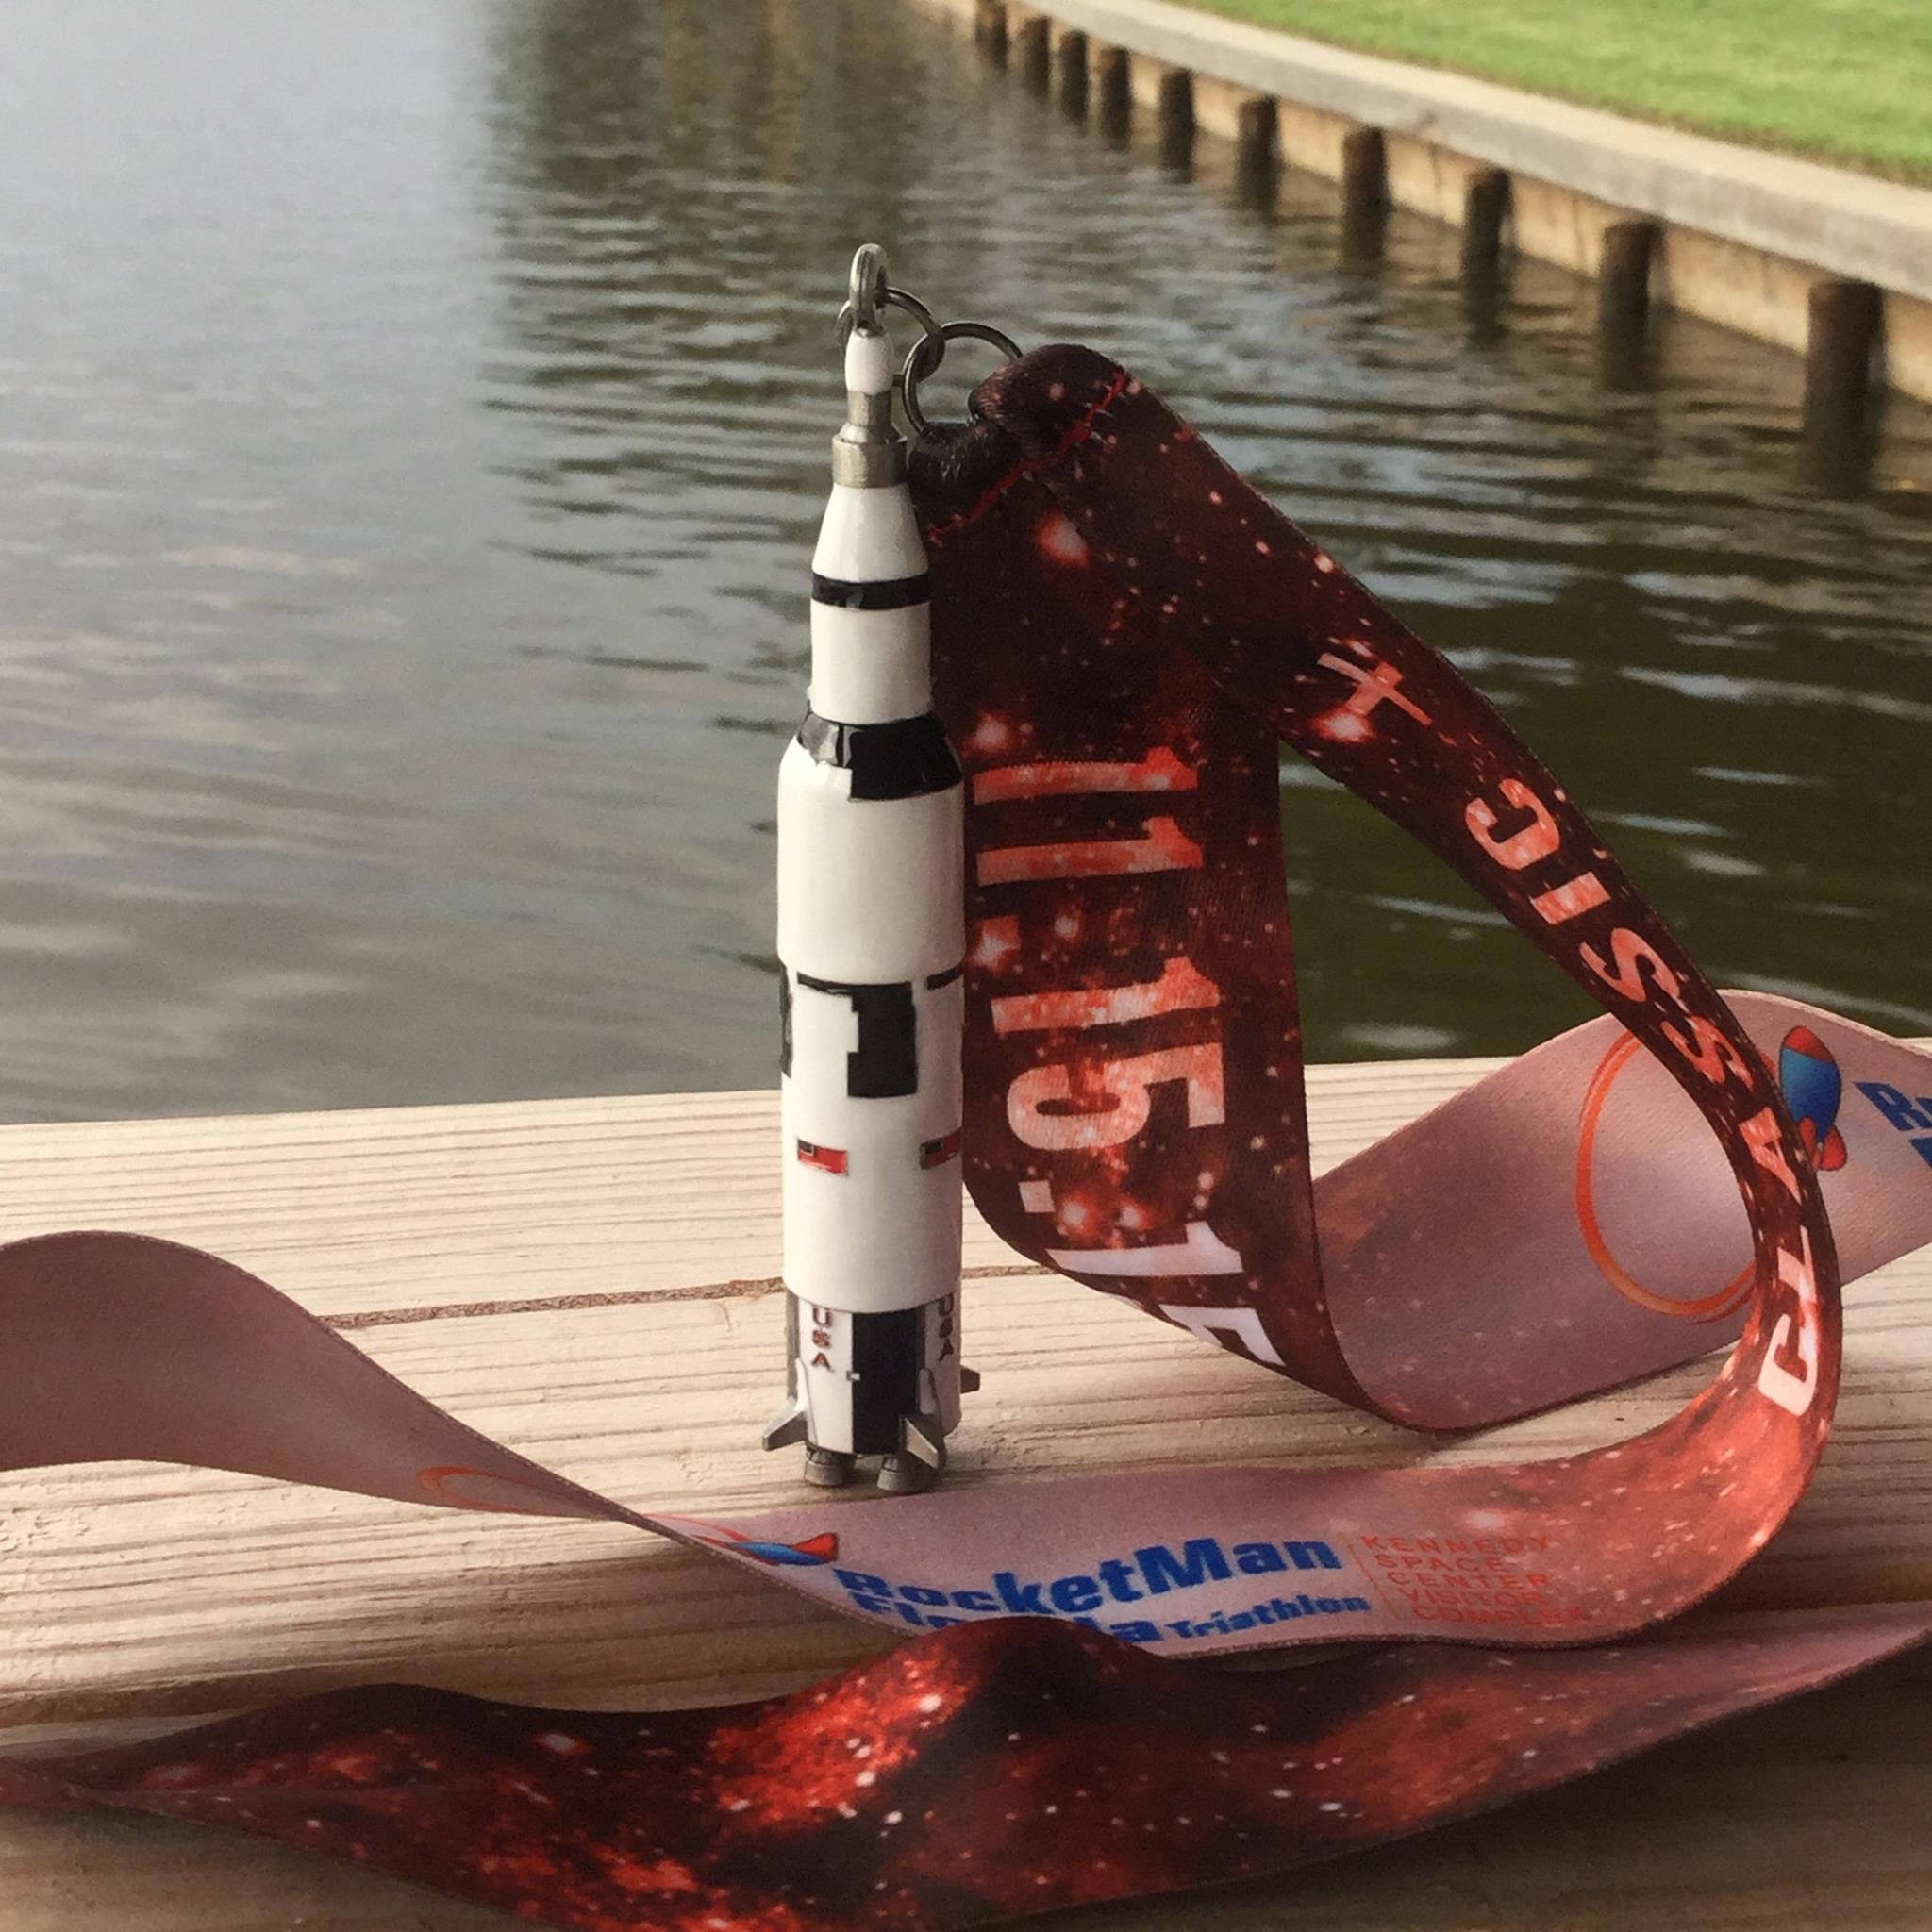 Saturn V shaped finisher's medal for the 2015 Rocketman Florida Triathlon, courtesy Smooth Running